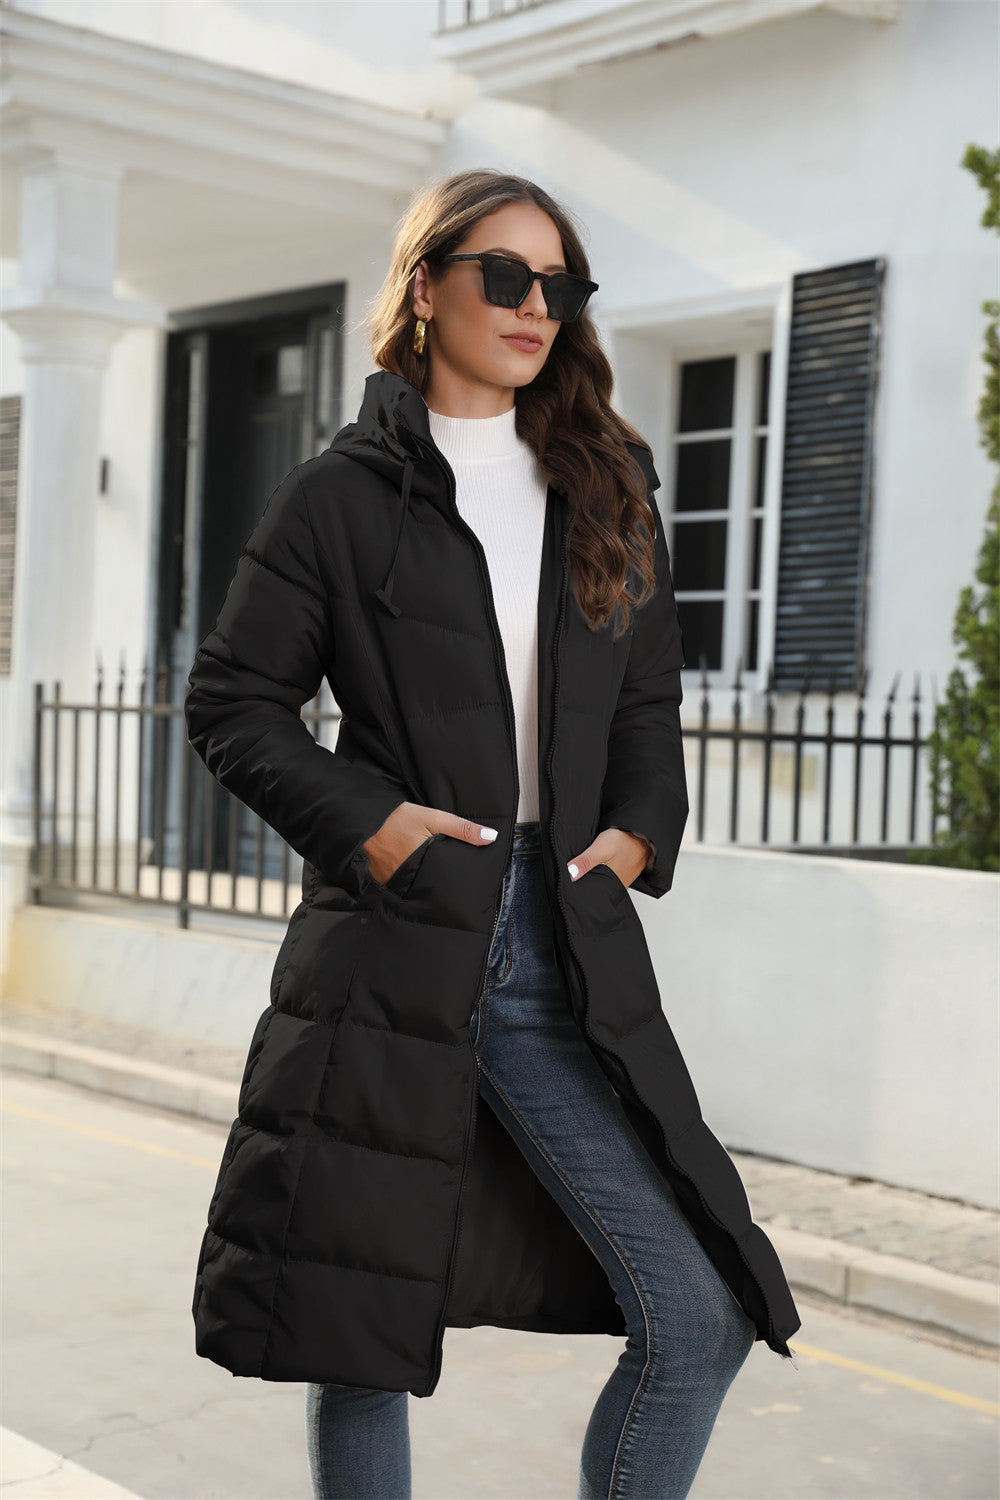 Swag Fall hooded Long Puffer Coat, Women's down coats & jackets, Long  winter Parka Womens